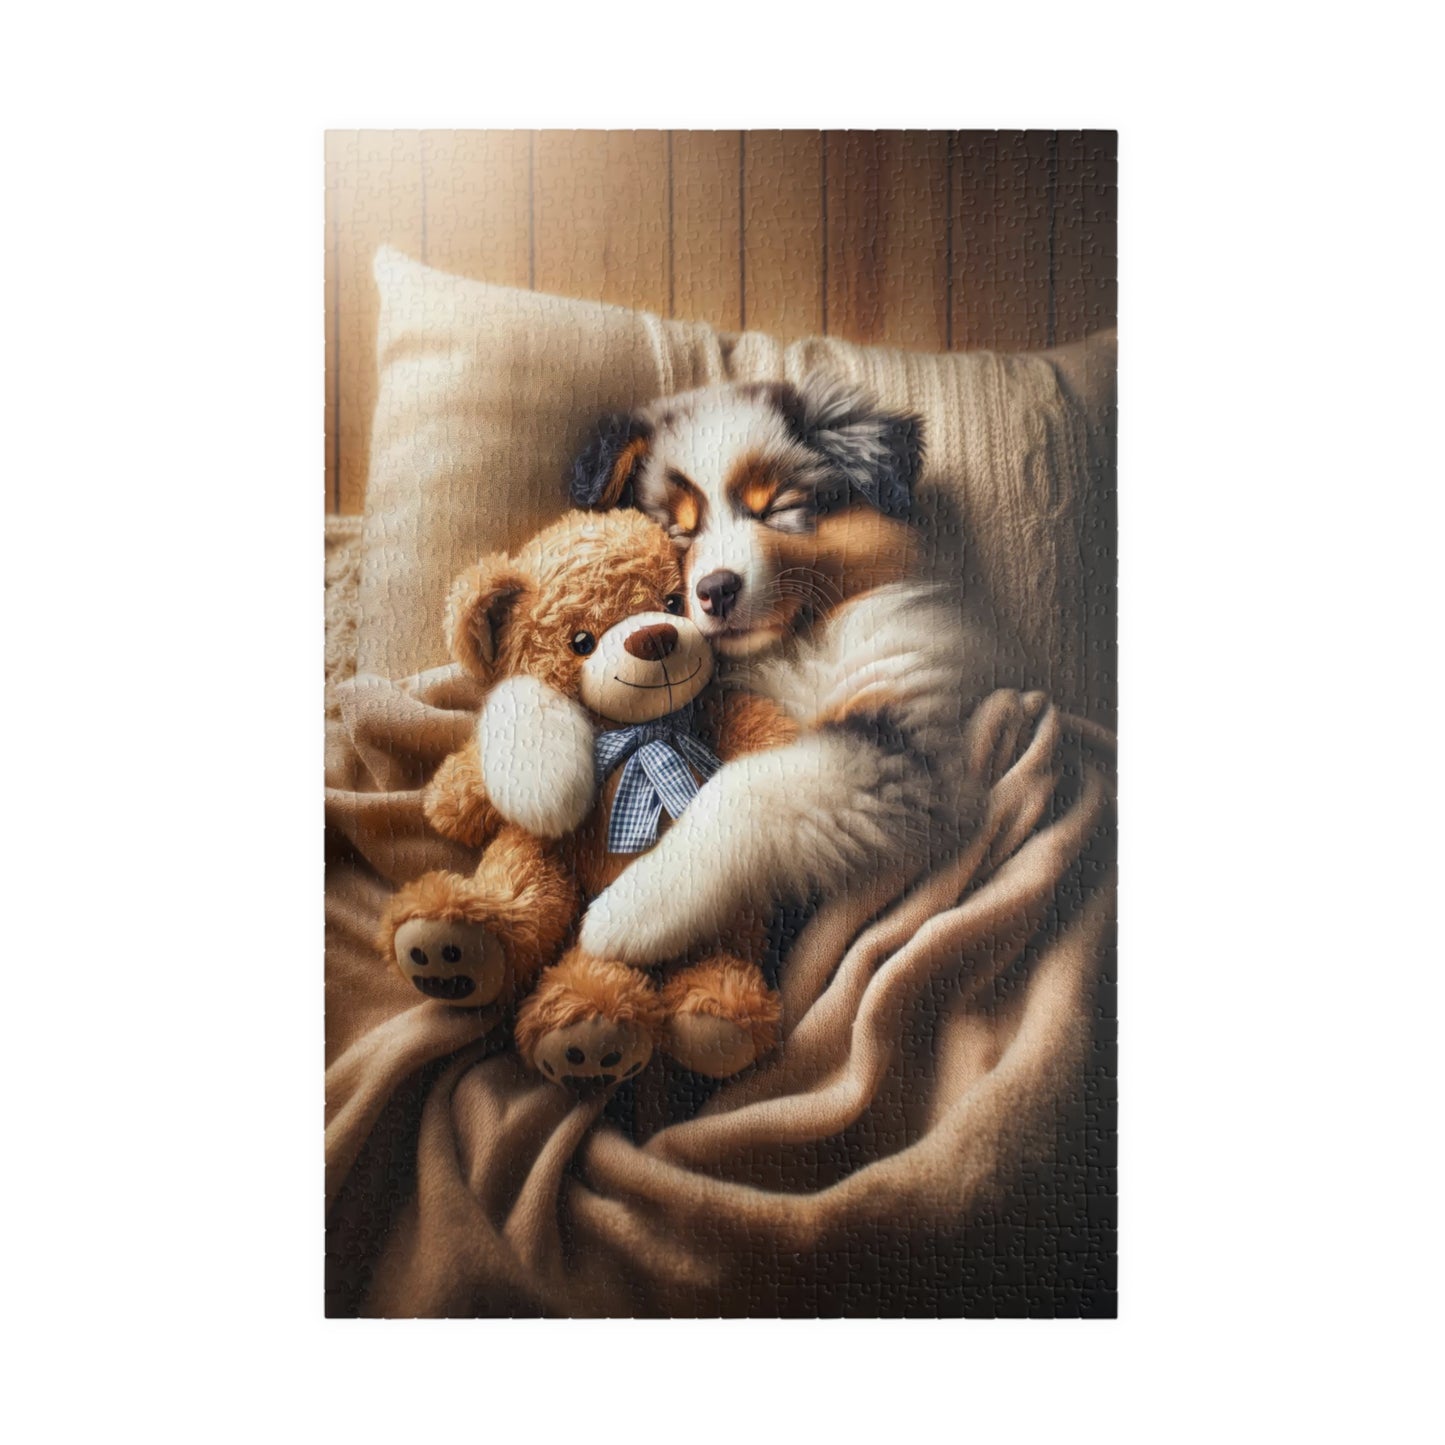 Australian Shepherd Puppy Dreams Puzzle - Perfect Relaxation Activity, Family Entertainment, Various Piece Counts